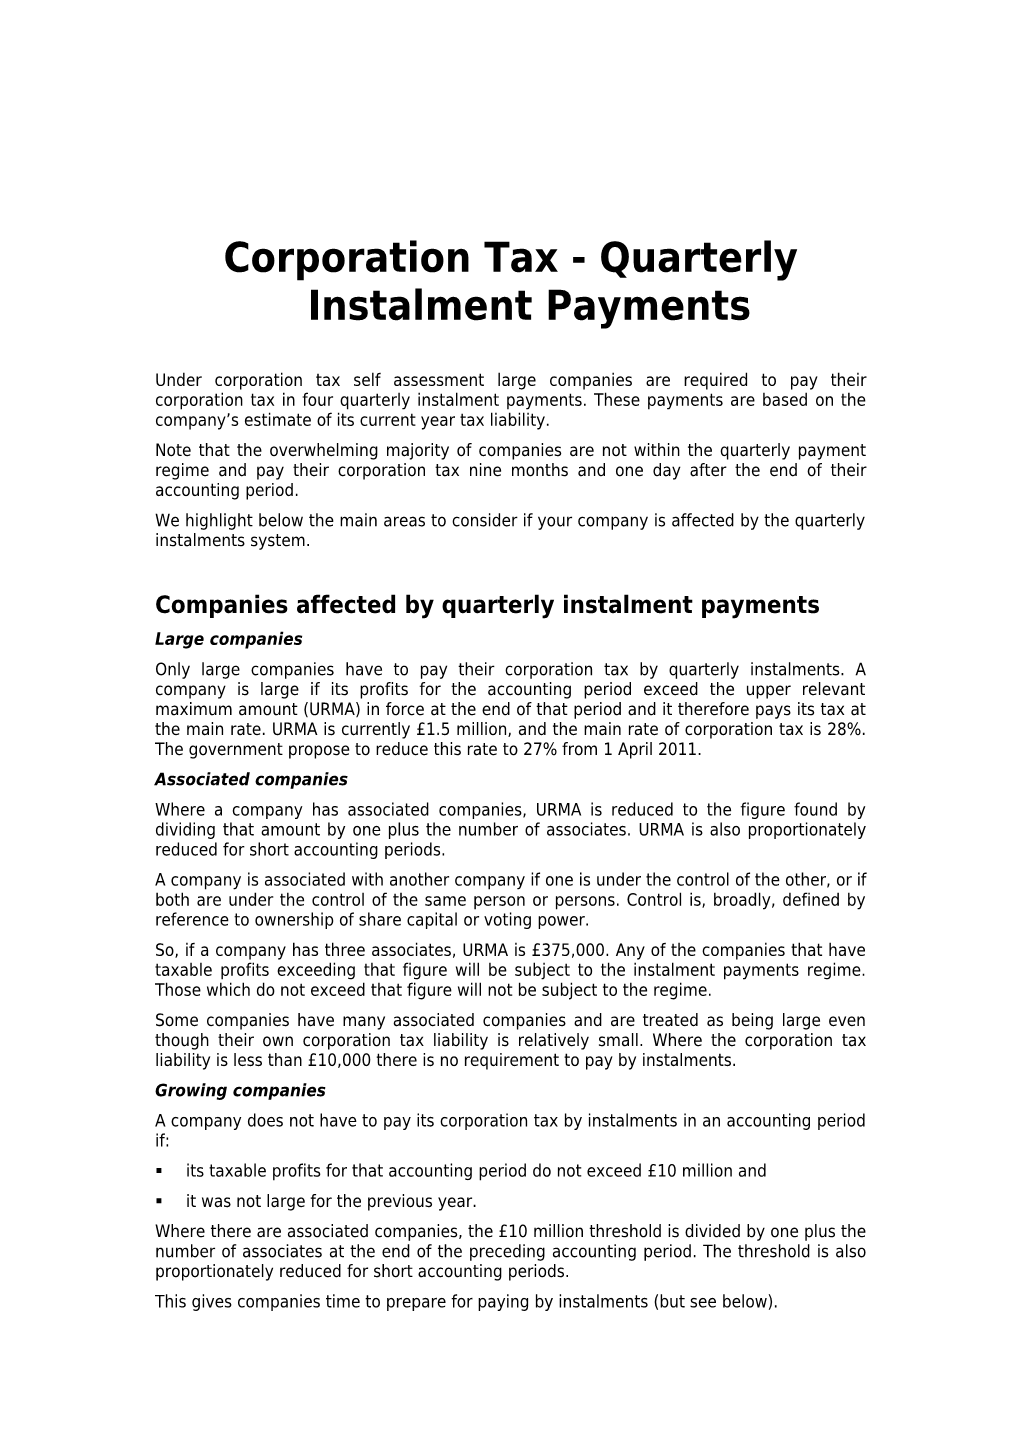 Corporation Tax - Quarterly Instalment Payments